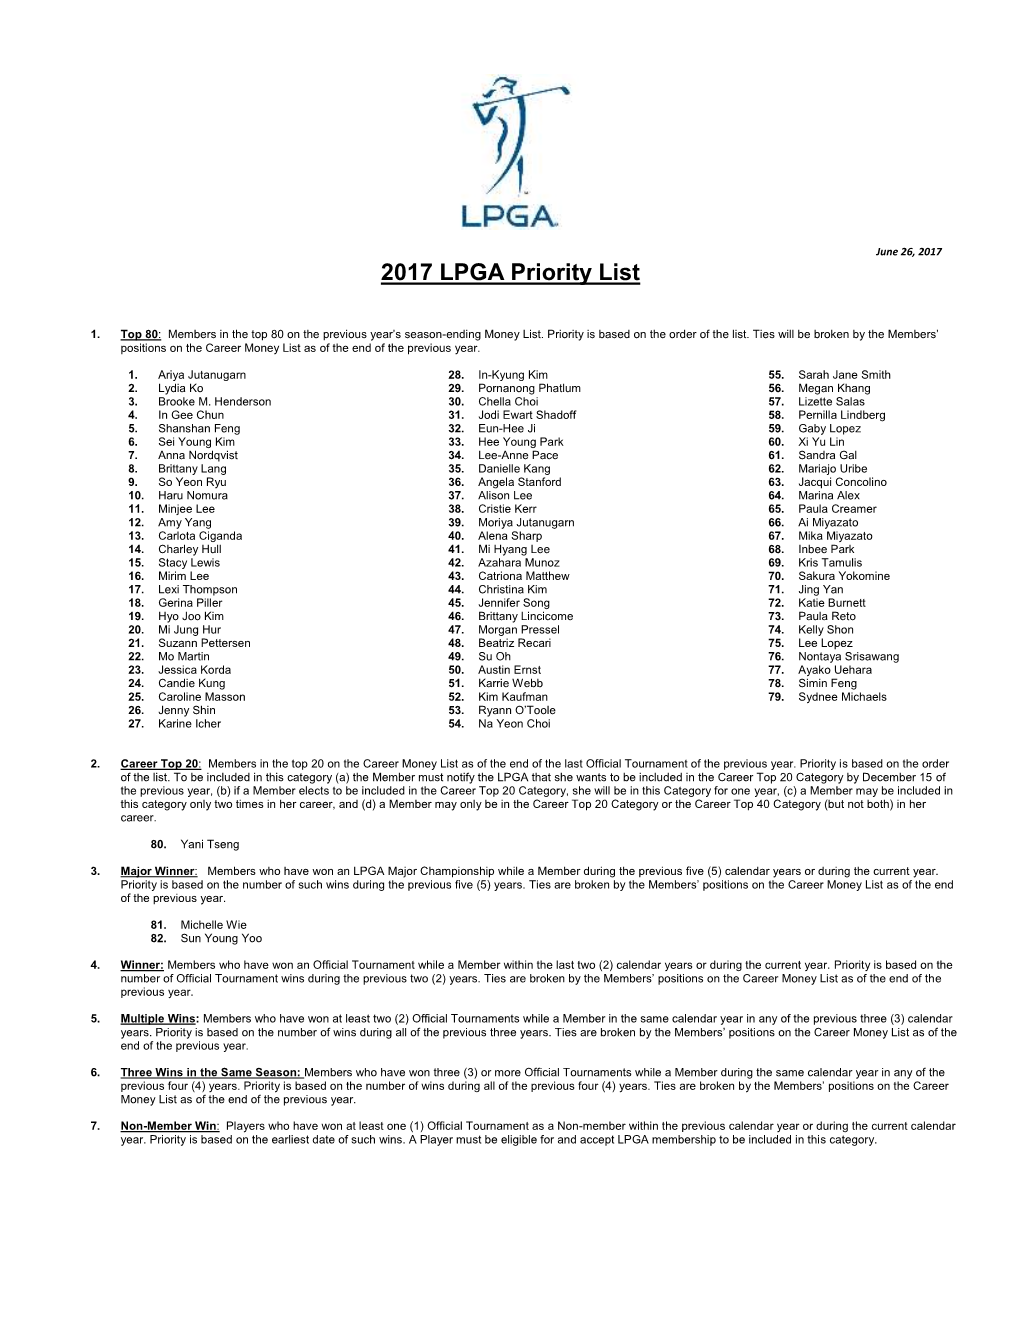 2017 LPGA Priority List